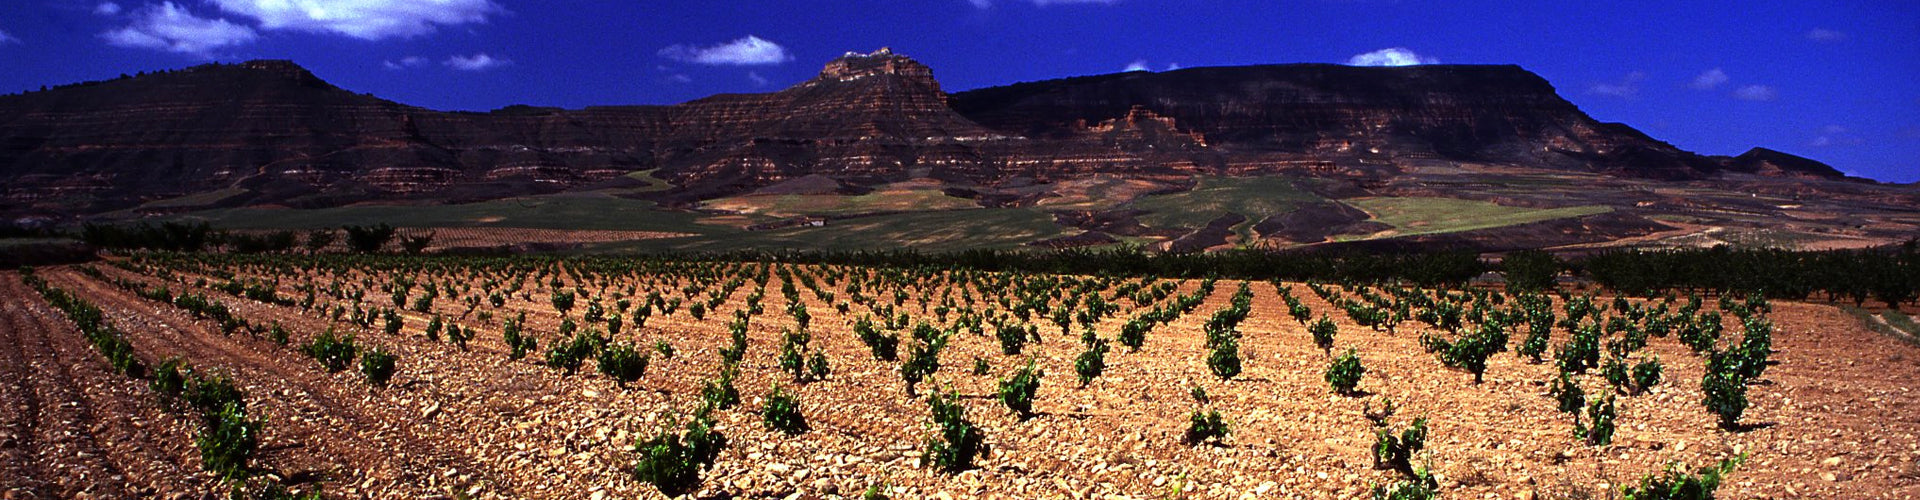 Bodegas San Alejandro Vineyards in the Calatayud region of Northern Spain